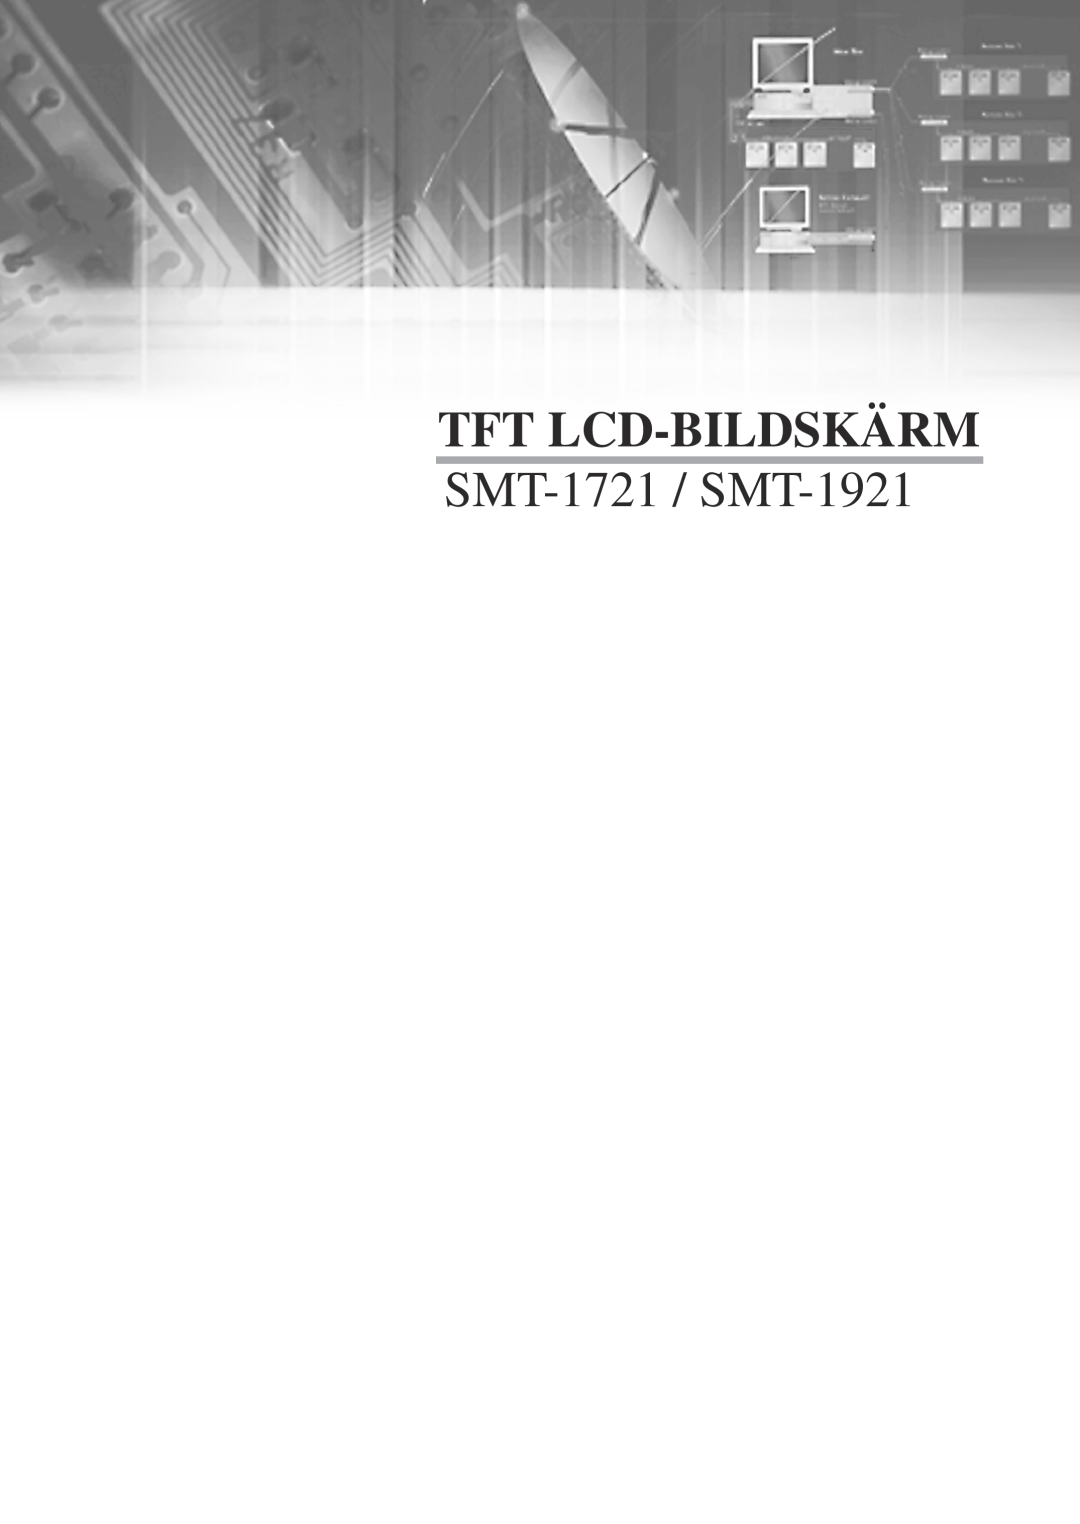 Samsung SMT-1921P, SMT-1721P manual Tft Lcd-Bildskärm, SMT-1721 / SMT-1921 